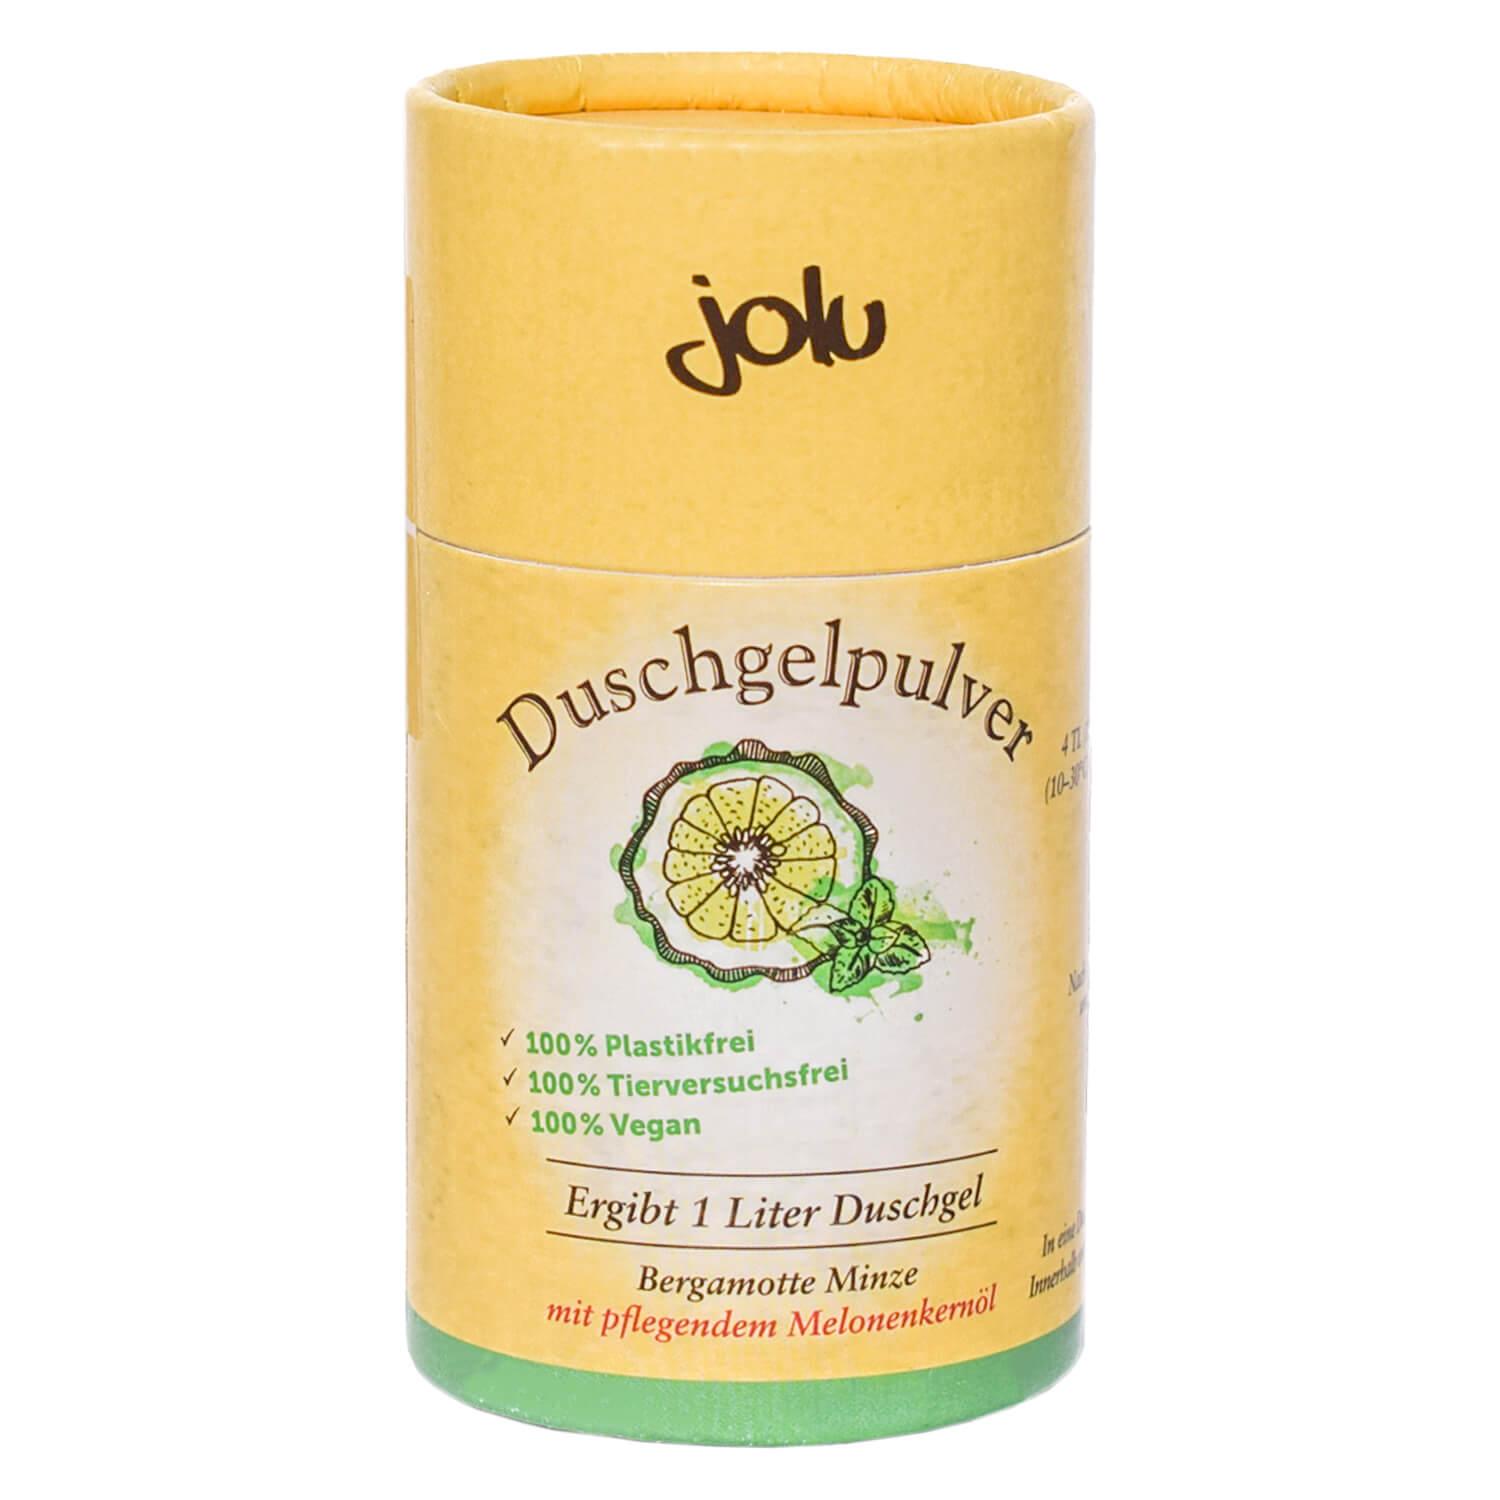 jolu - Duschgelpulver Bergamotte/Minze